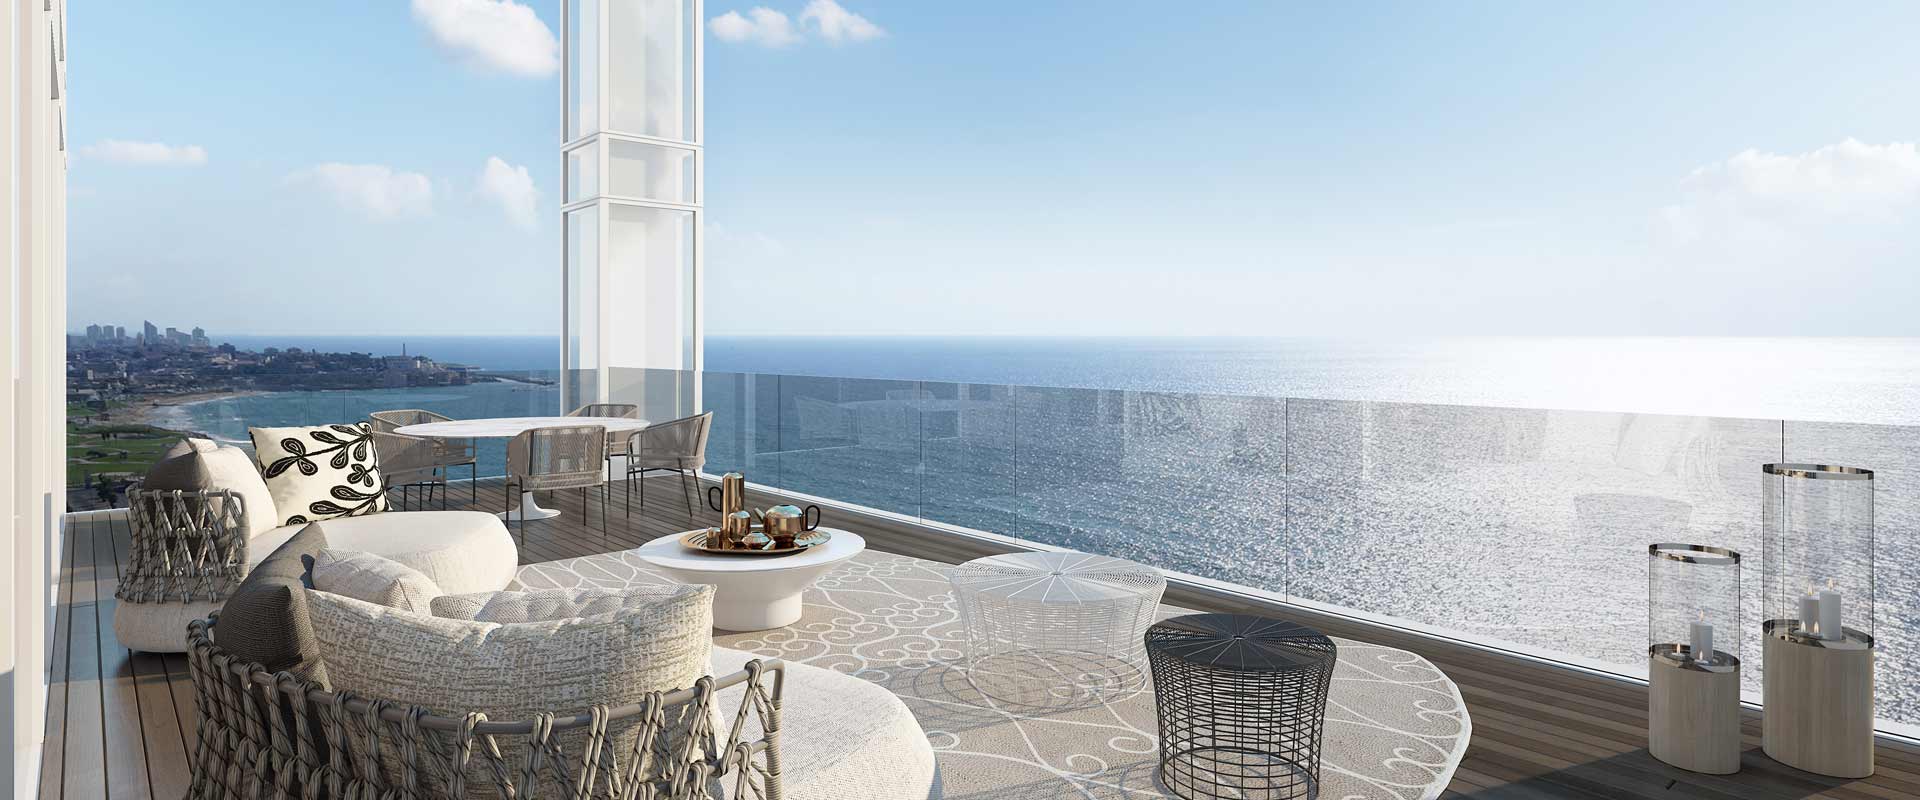 David Promenade Residences Terrace, 26th floor penthouse